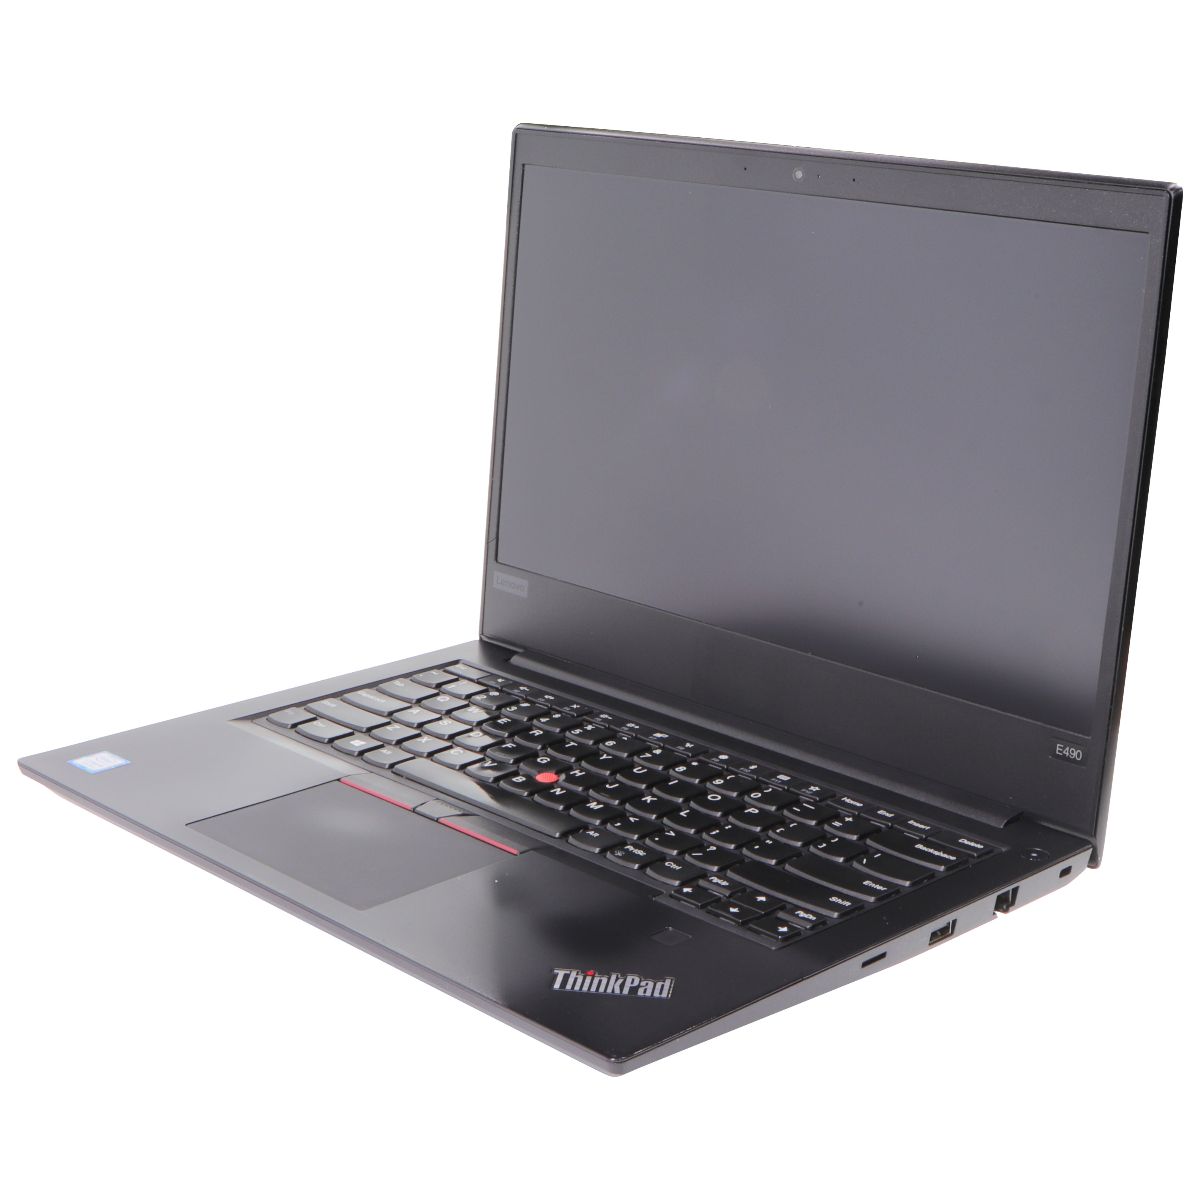 Lenovo ThinkPad E490 (14-in) FHD Laptop (20N8-001BUS) i5-8265U/256GB/4GB/10 Home Laptops - PC Laptops & Netbooks Lenovo    - Simple Cell Bulk Wholesale Pricing - USA Seller